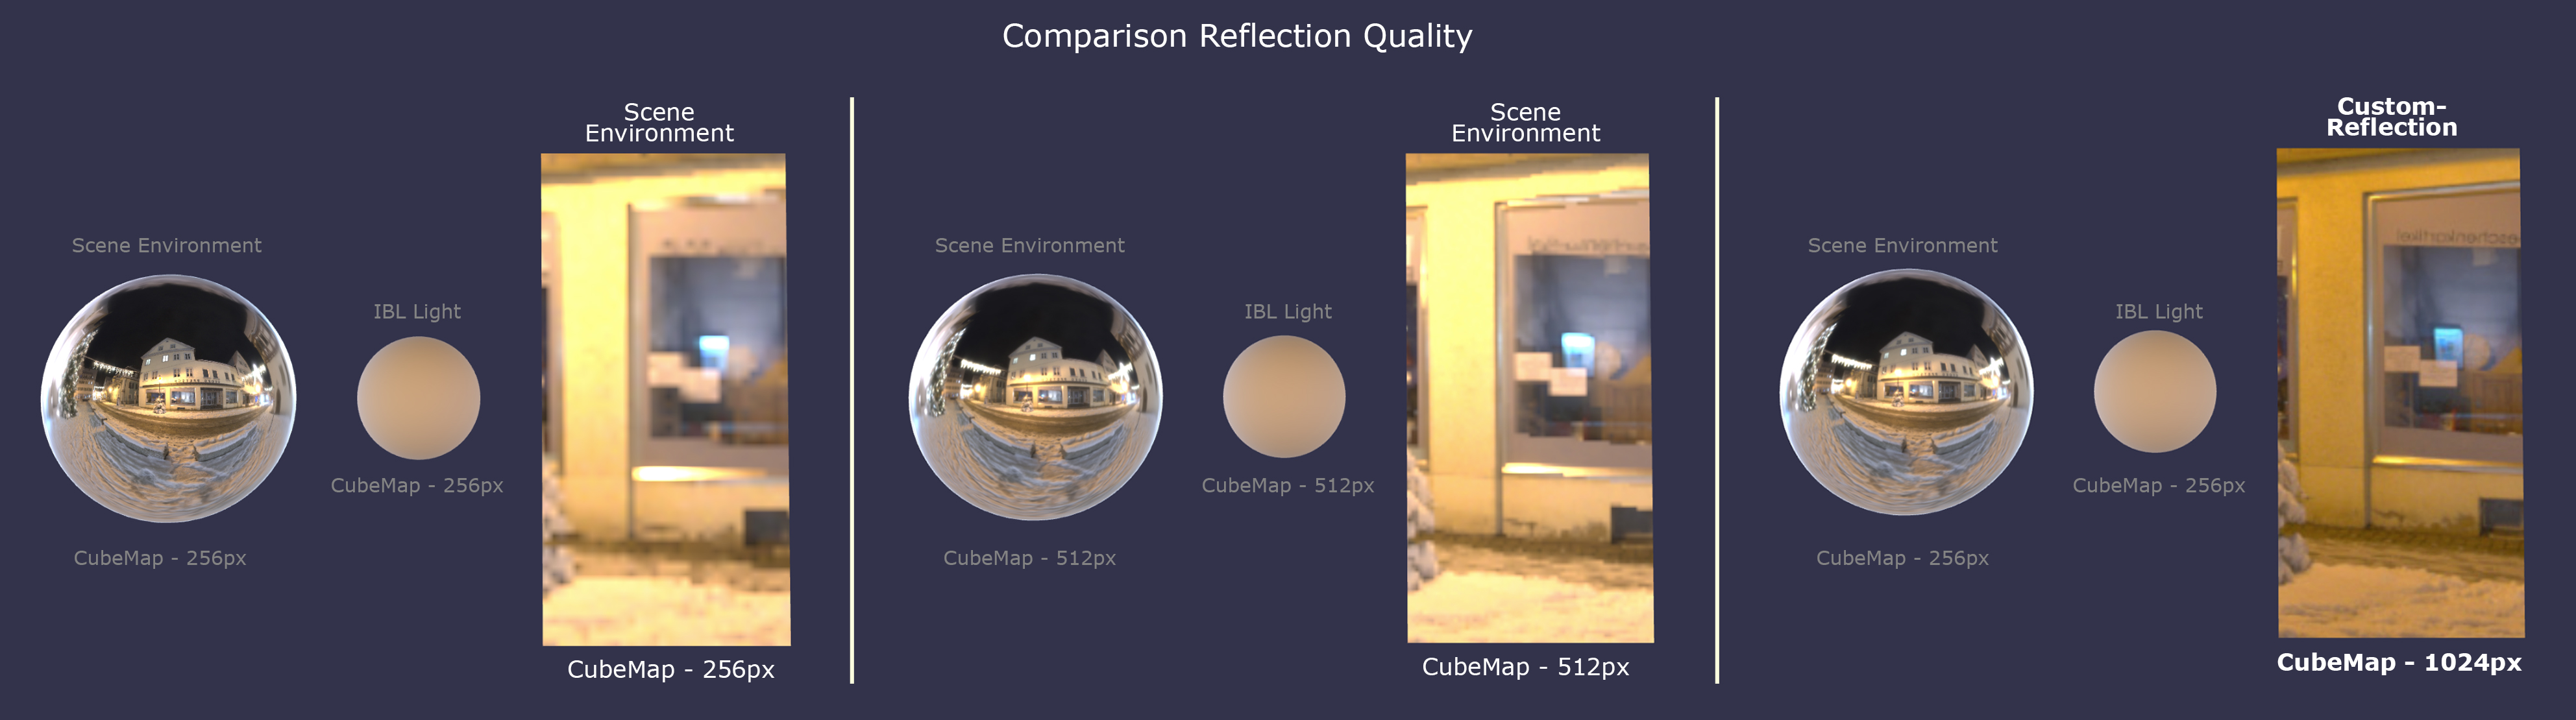 Comparison Reflection Quality!